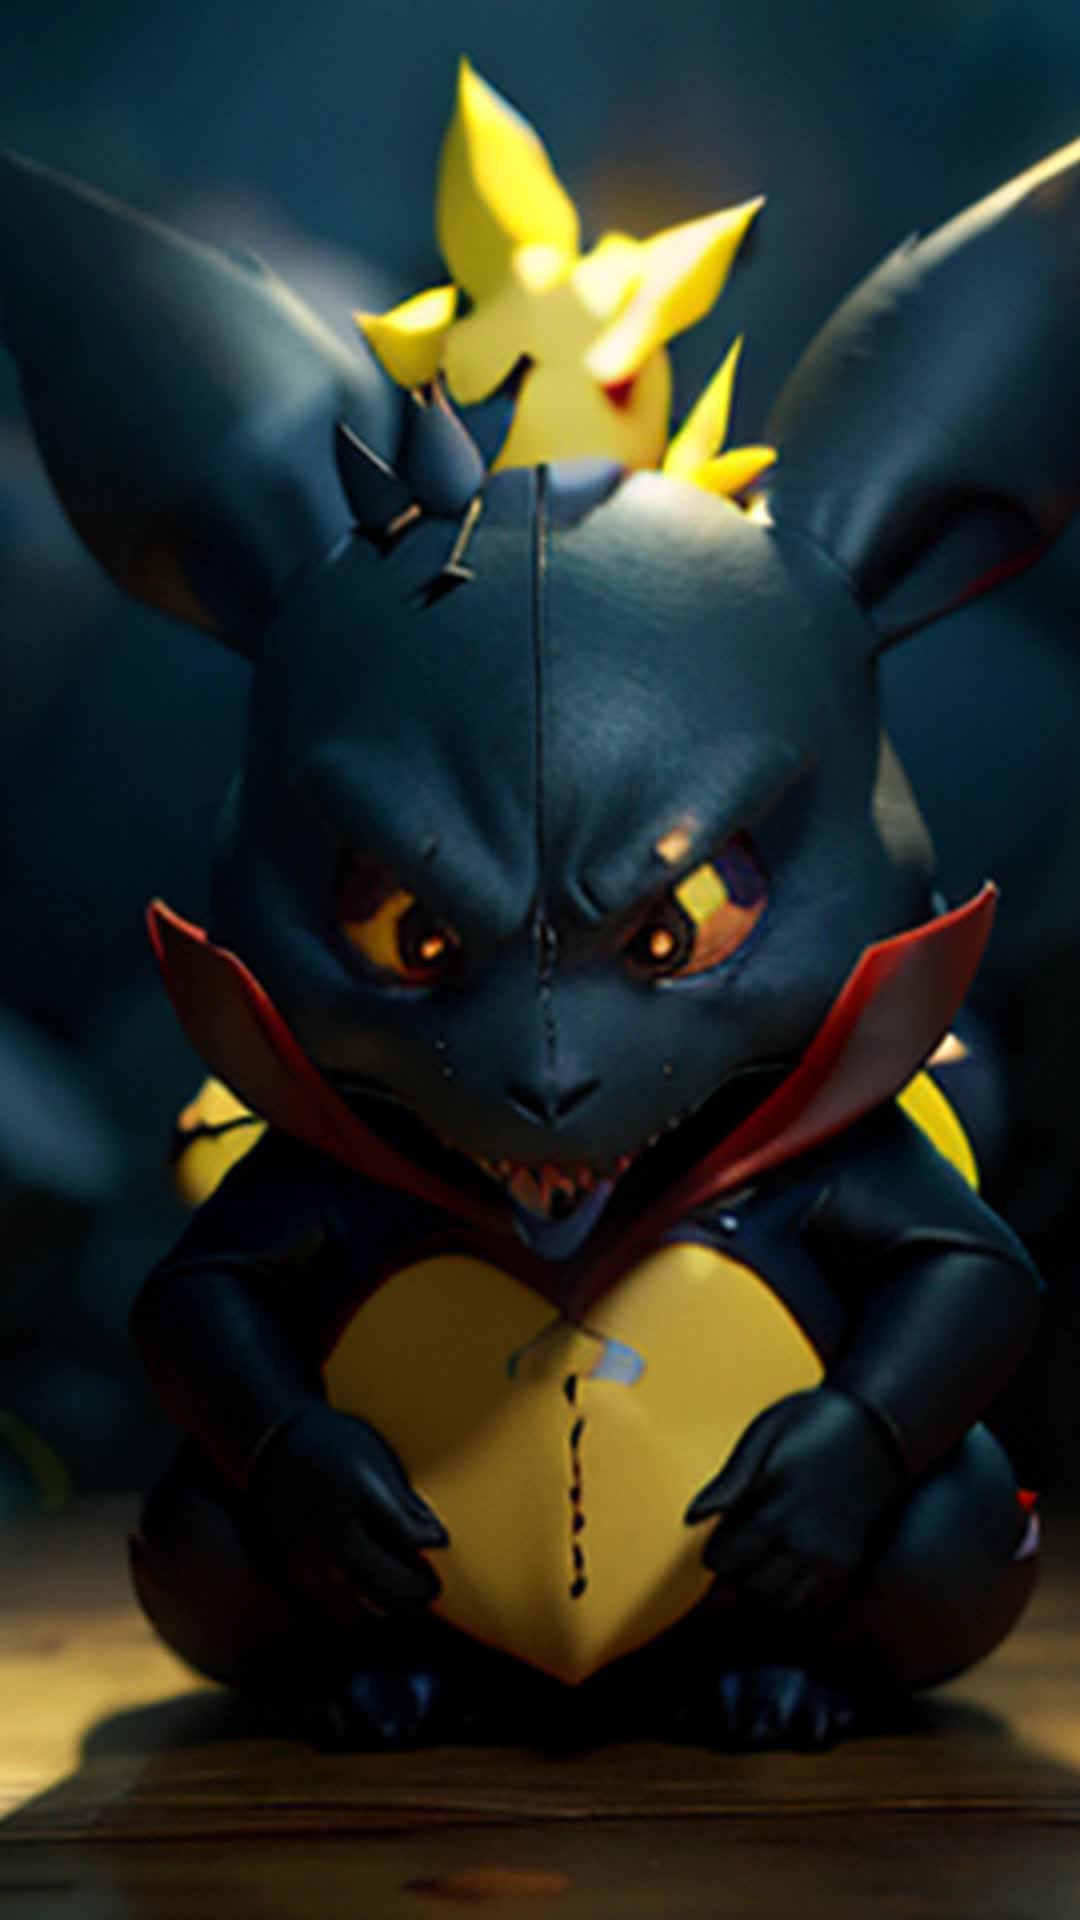 Darkrai declaring curse on berry, ominous tone, Pikachu weak and dizzy, tense atmosphere, soft shadows, rendered by octane